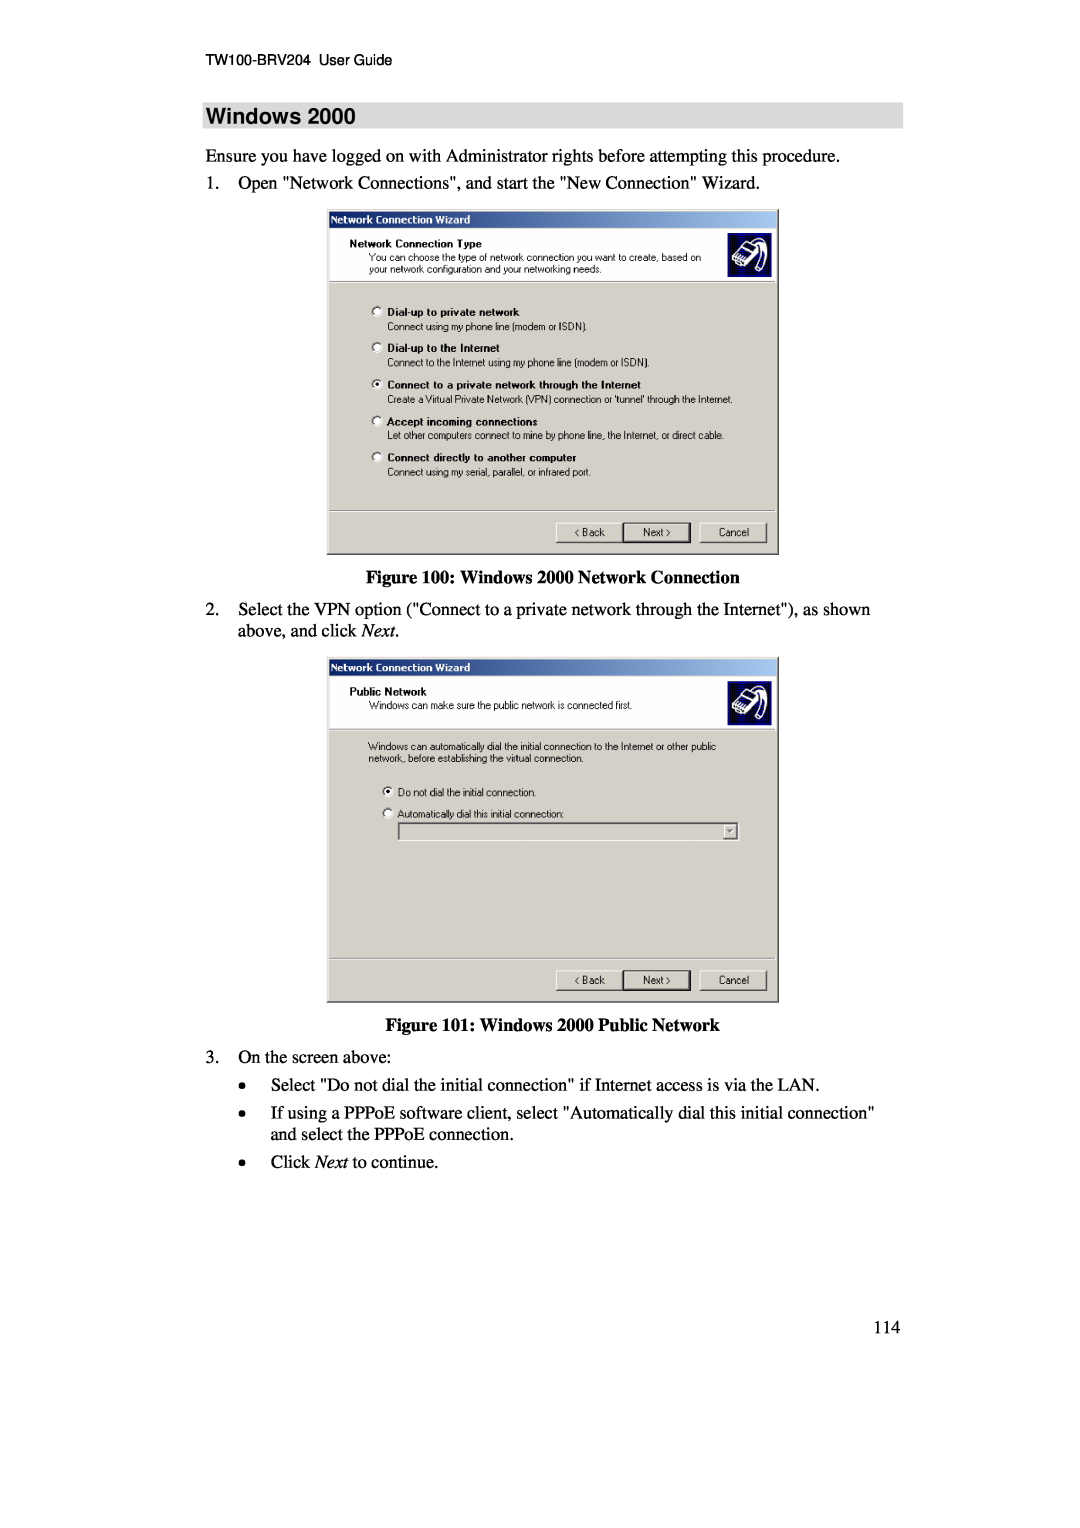 TRENDnet BRV204 manual Windows 2000 Network Connection, Windows 2000 Public Network 